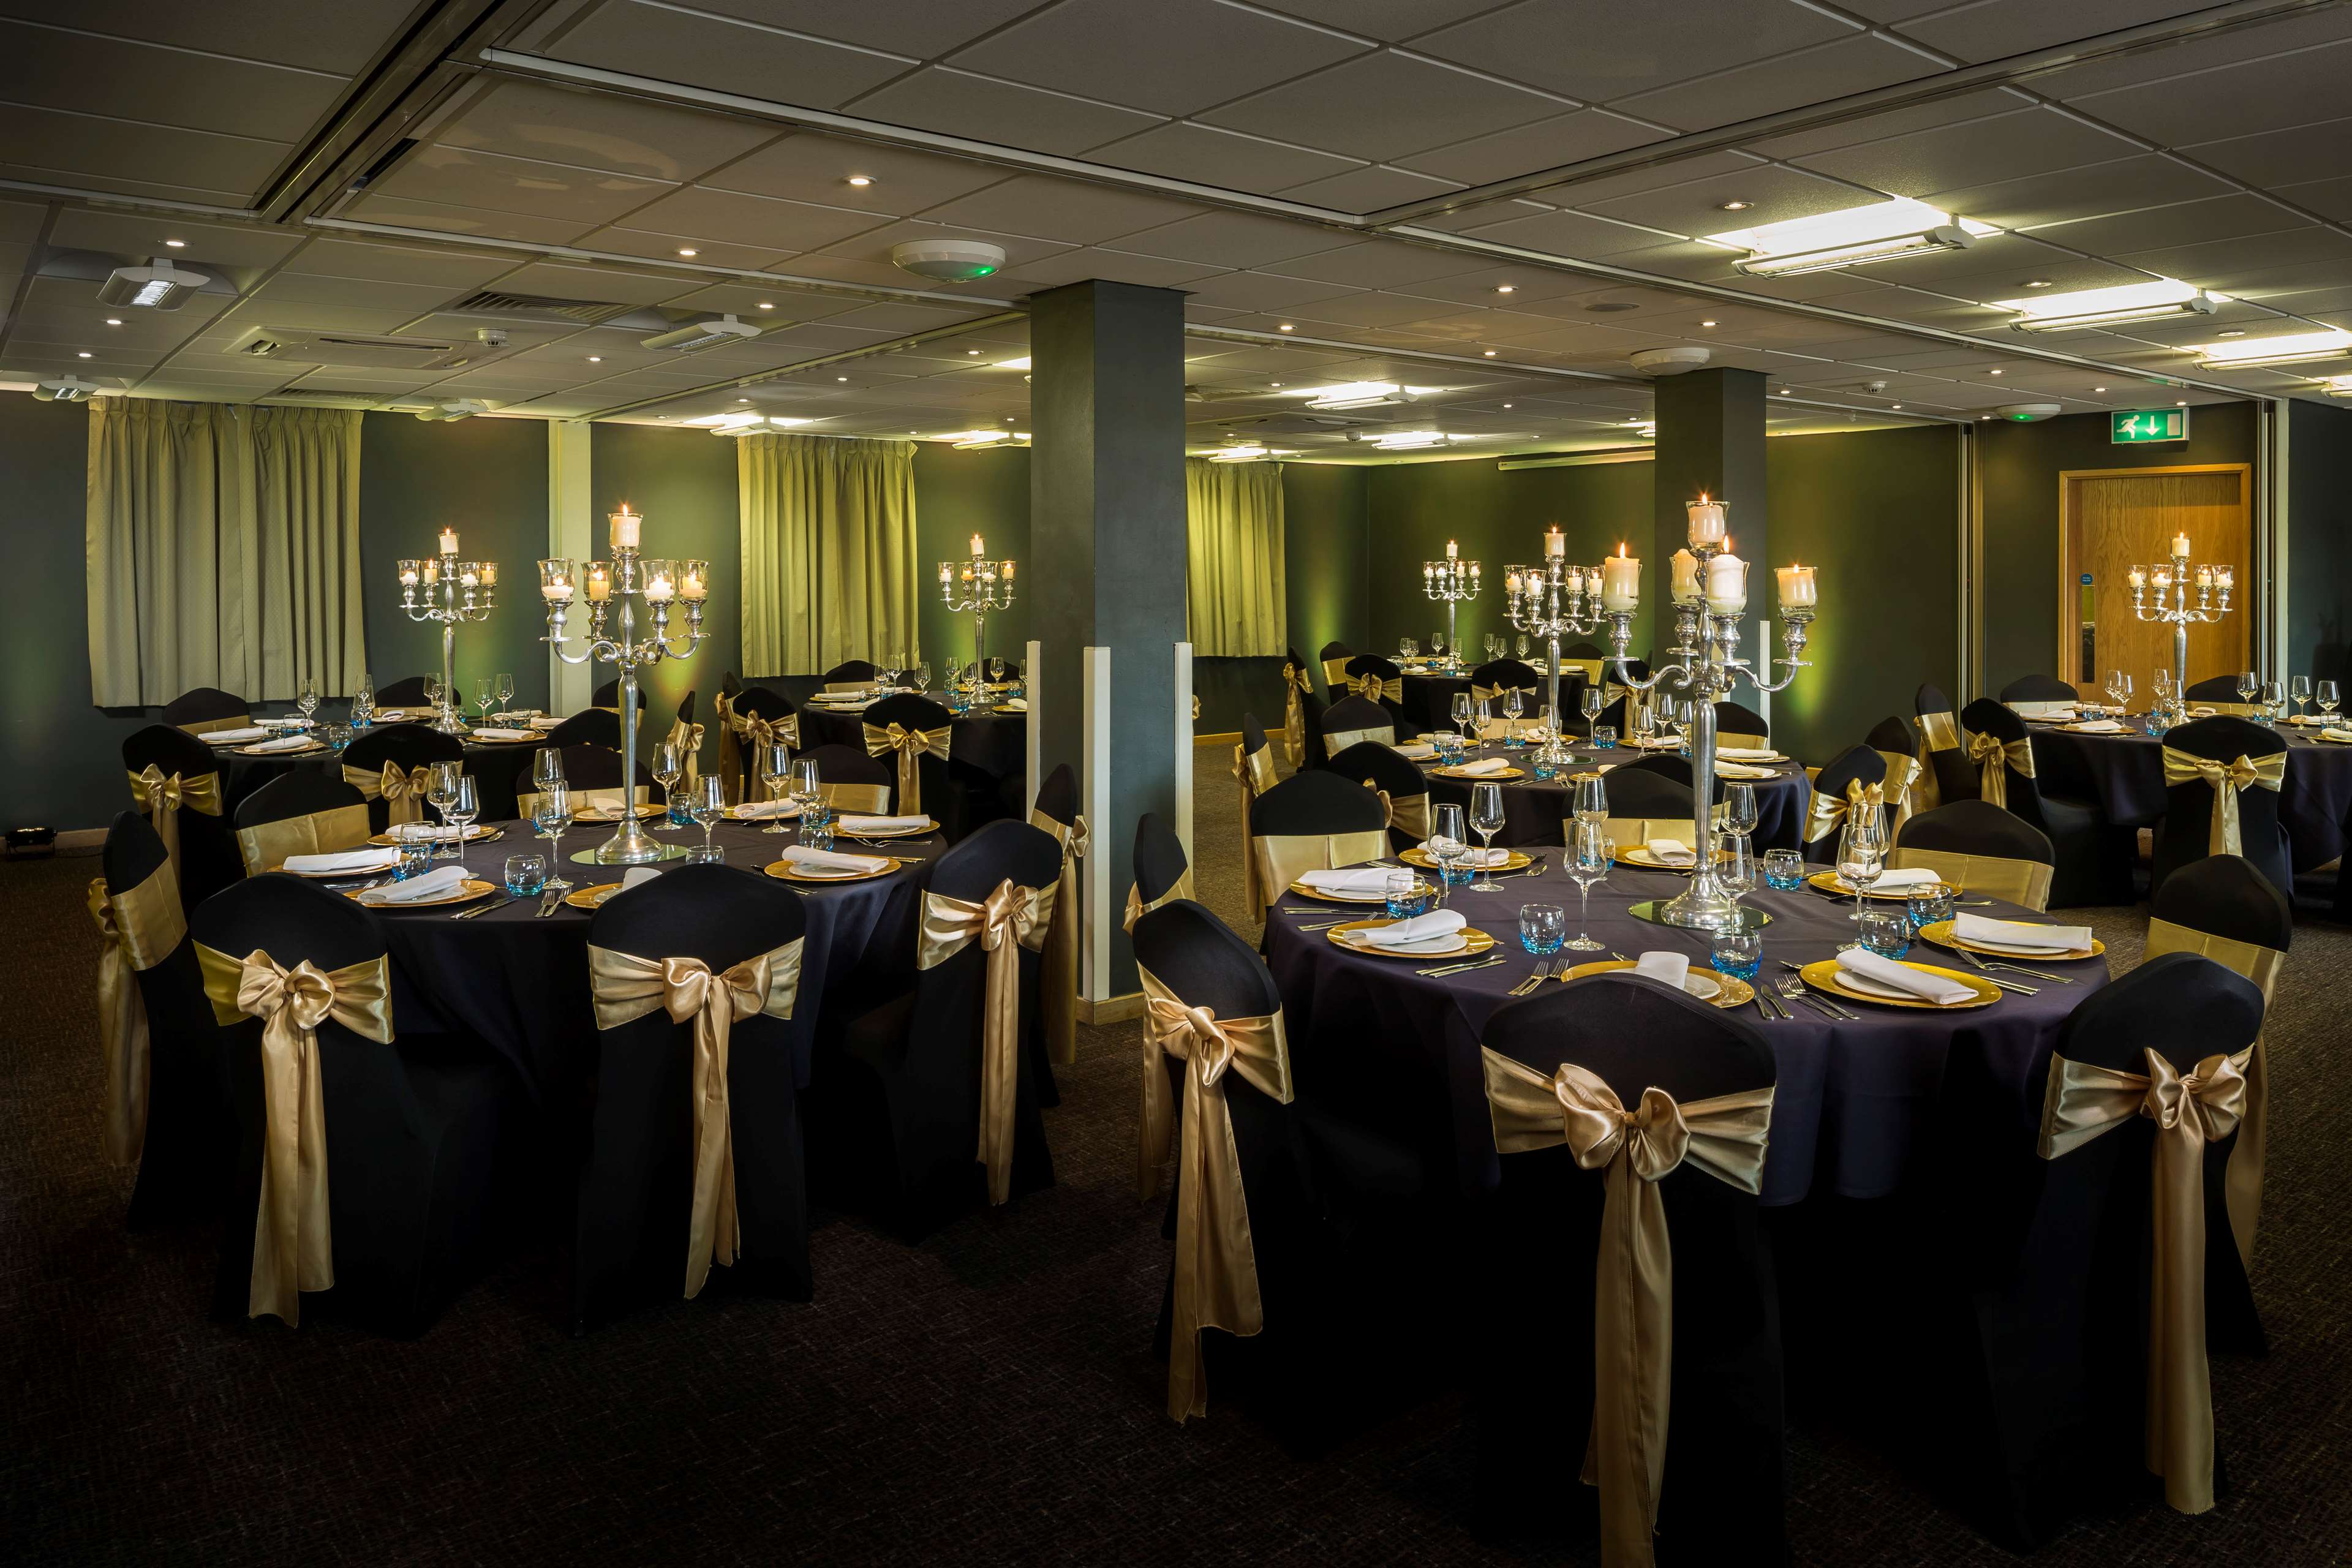 Meeting Room Banquet Park Inn by Radisson Peterborough Peterborough 01733 353750